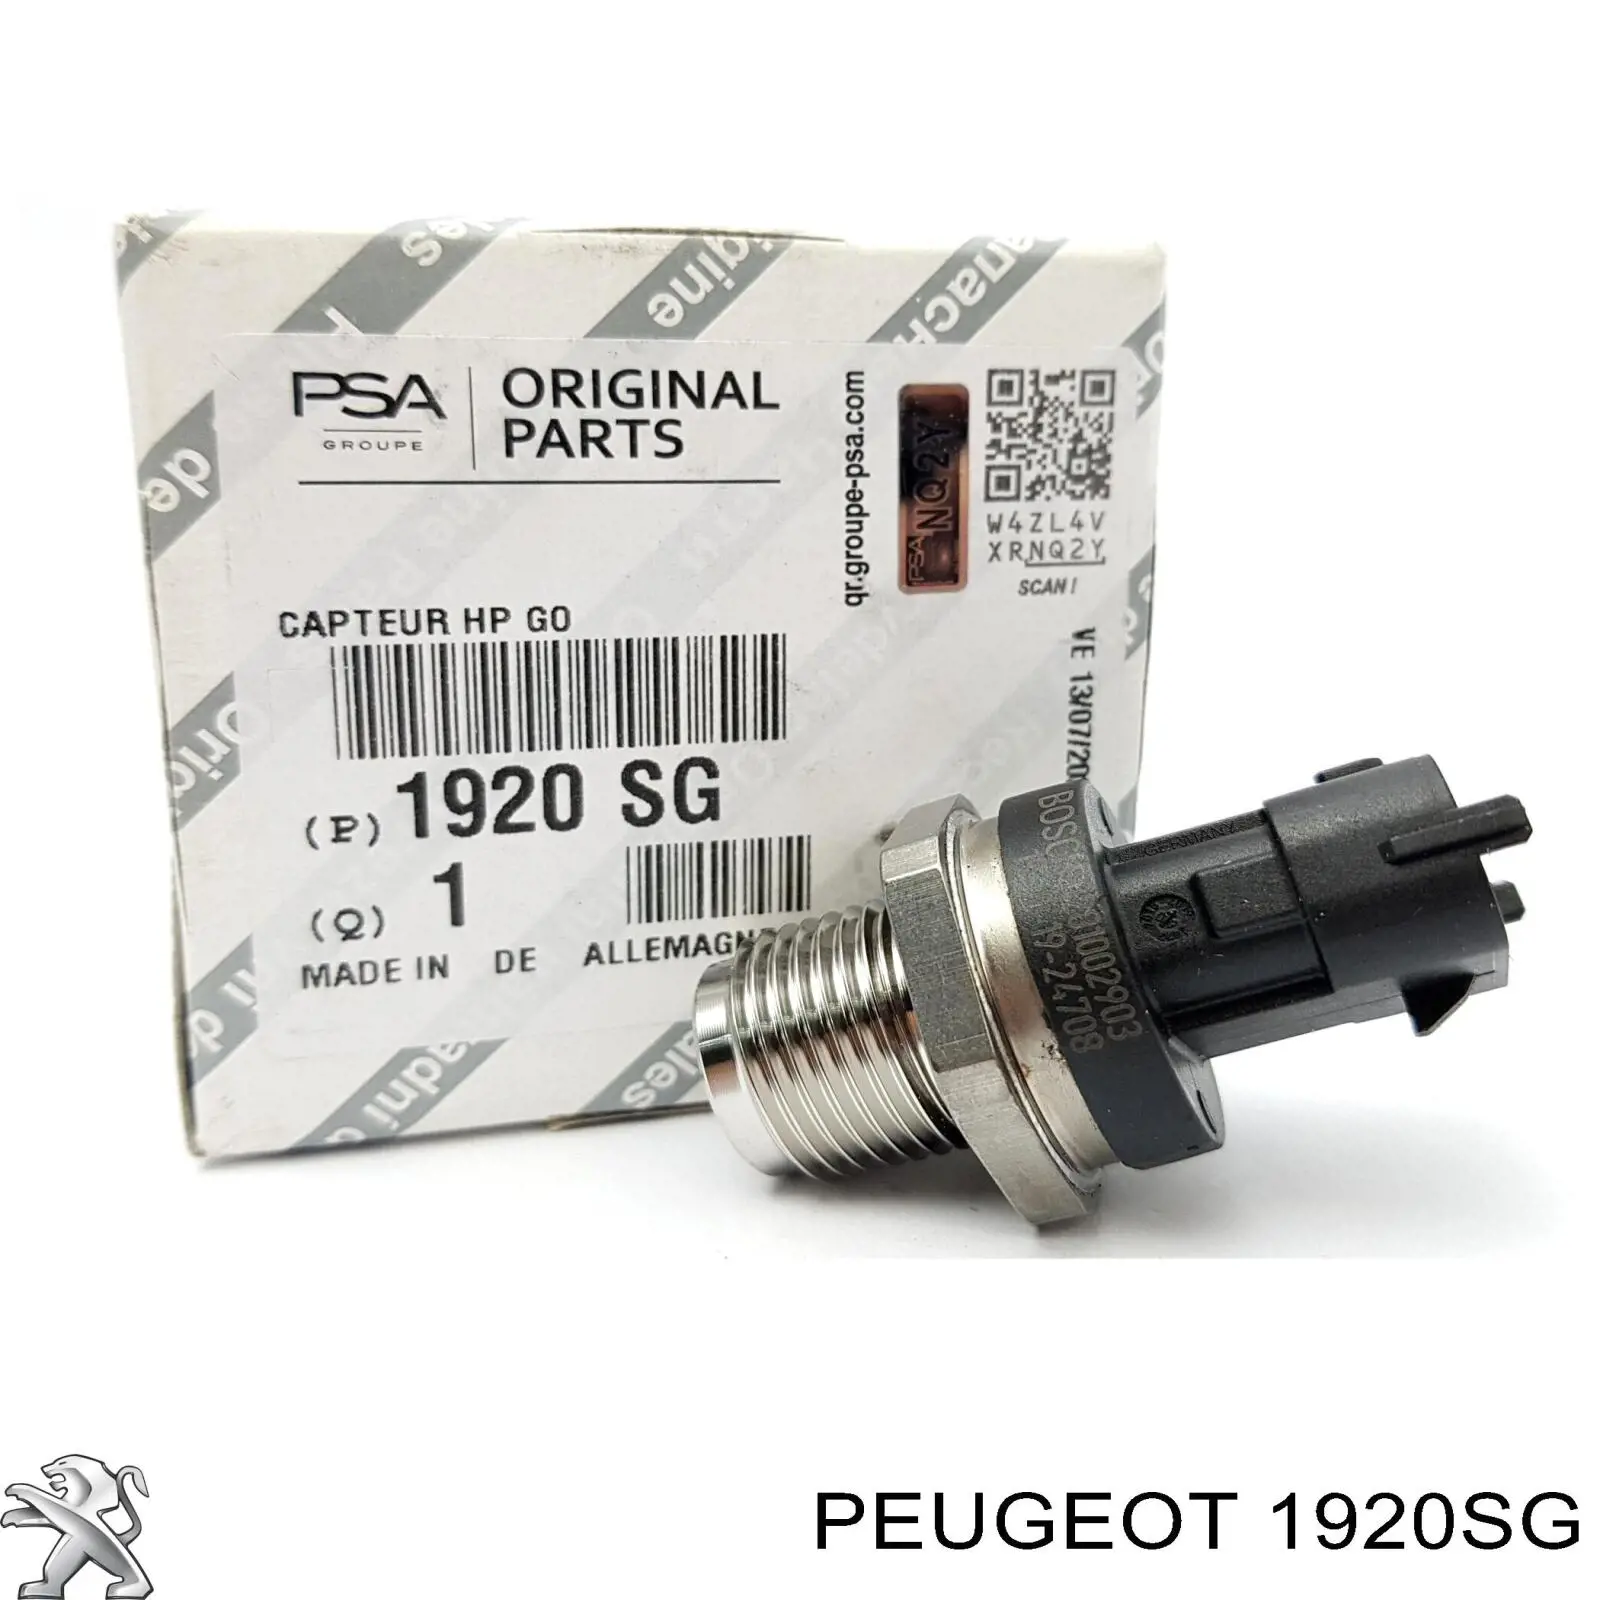 1920SG Peugeot/Citroen sensor de presión de combustible